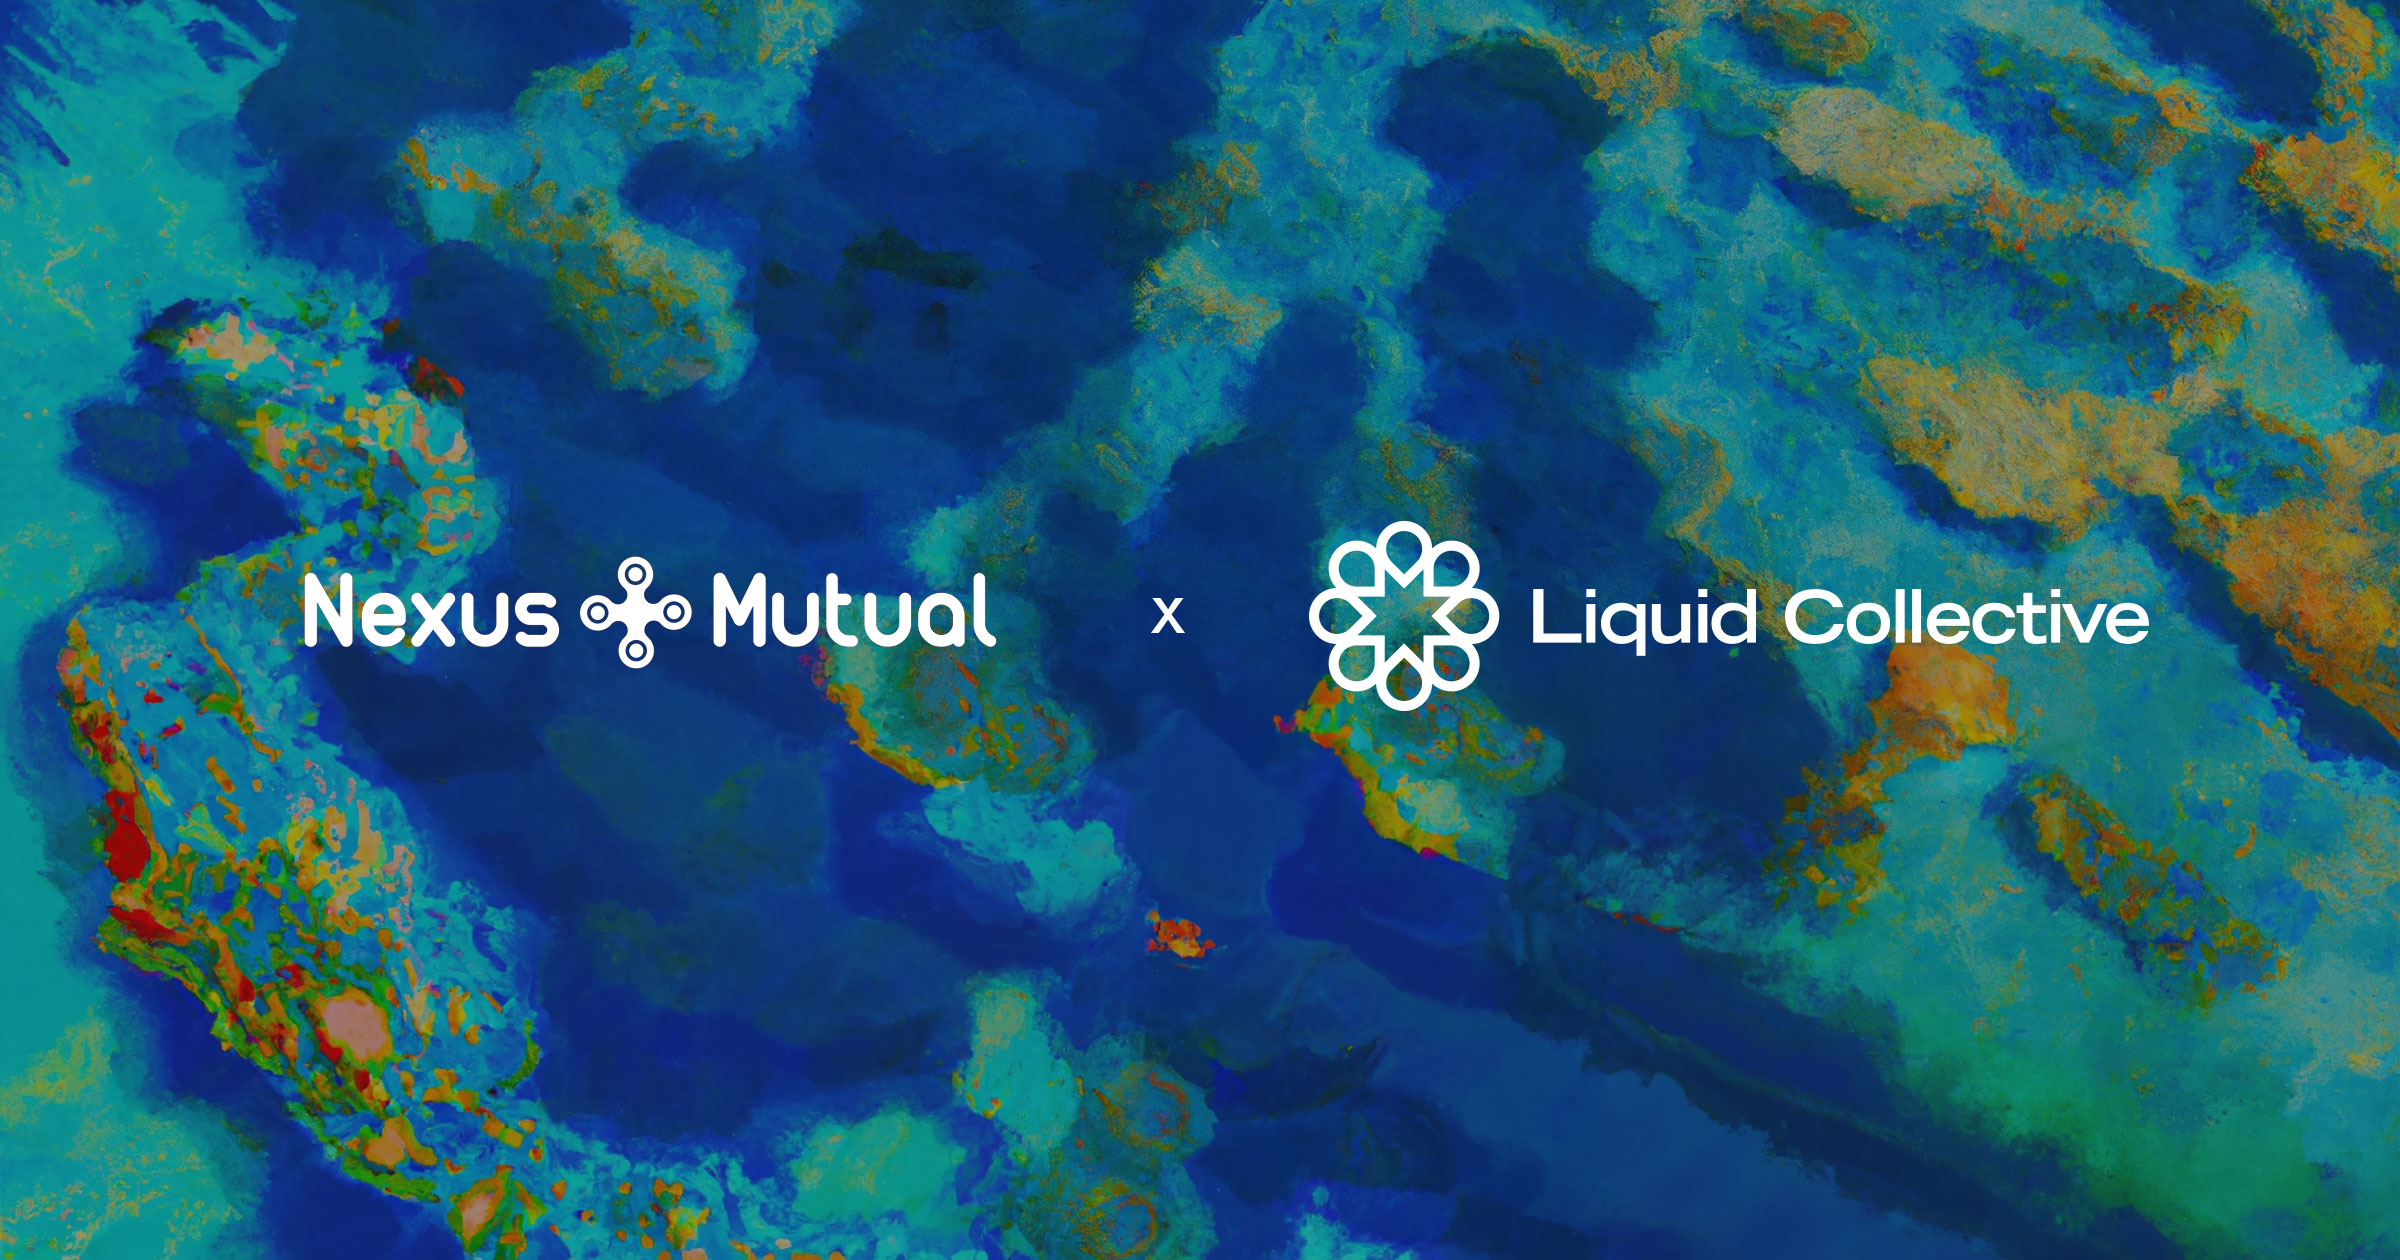 Liquid Collective and Nexus Mutual Collaborate to Launch Comprehensive Slashing Coverage Program